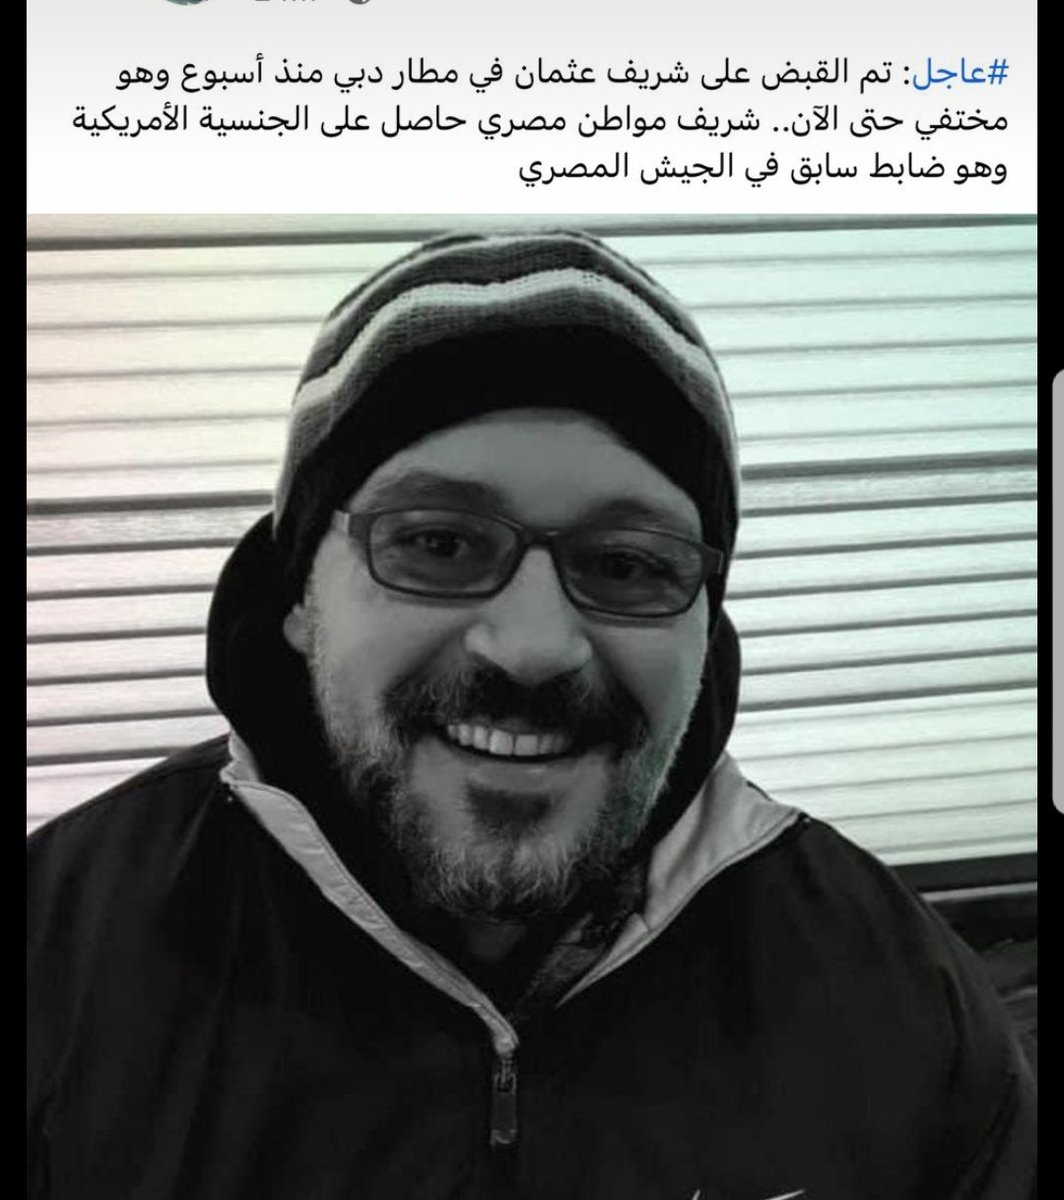 سبب سجن شريف عثمان الضابط المصري سابقا فور وصوله دبي